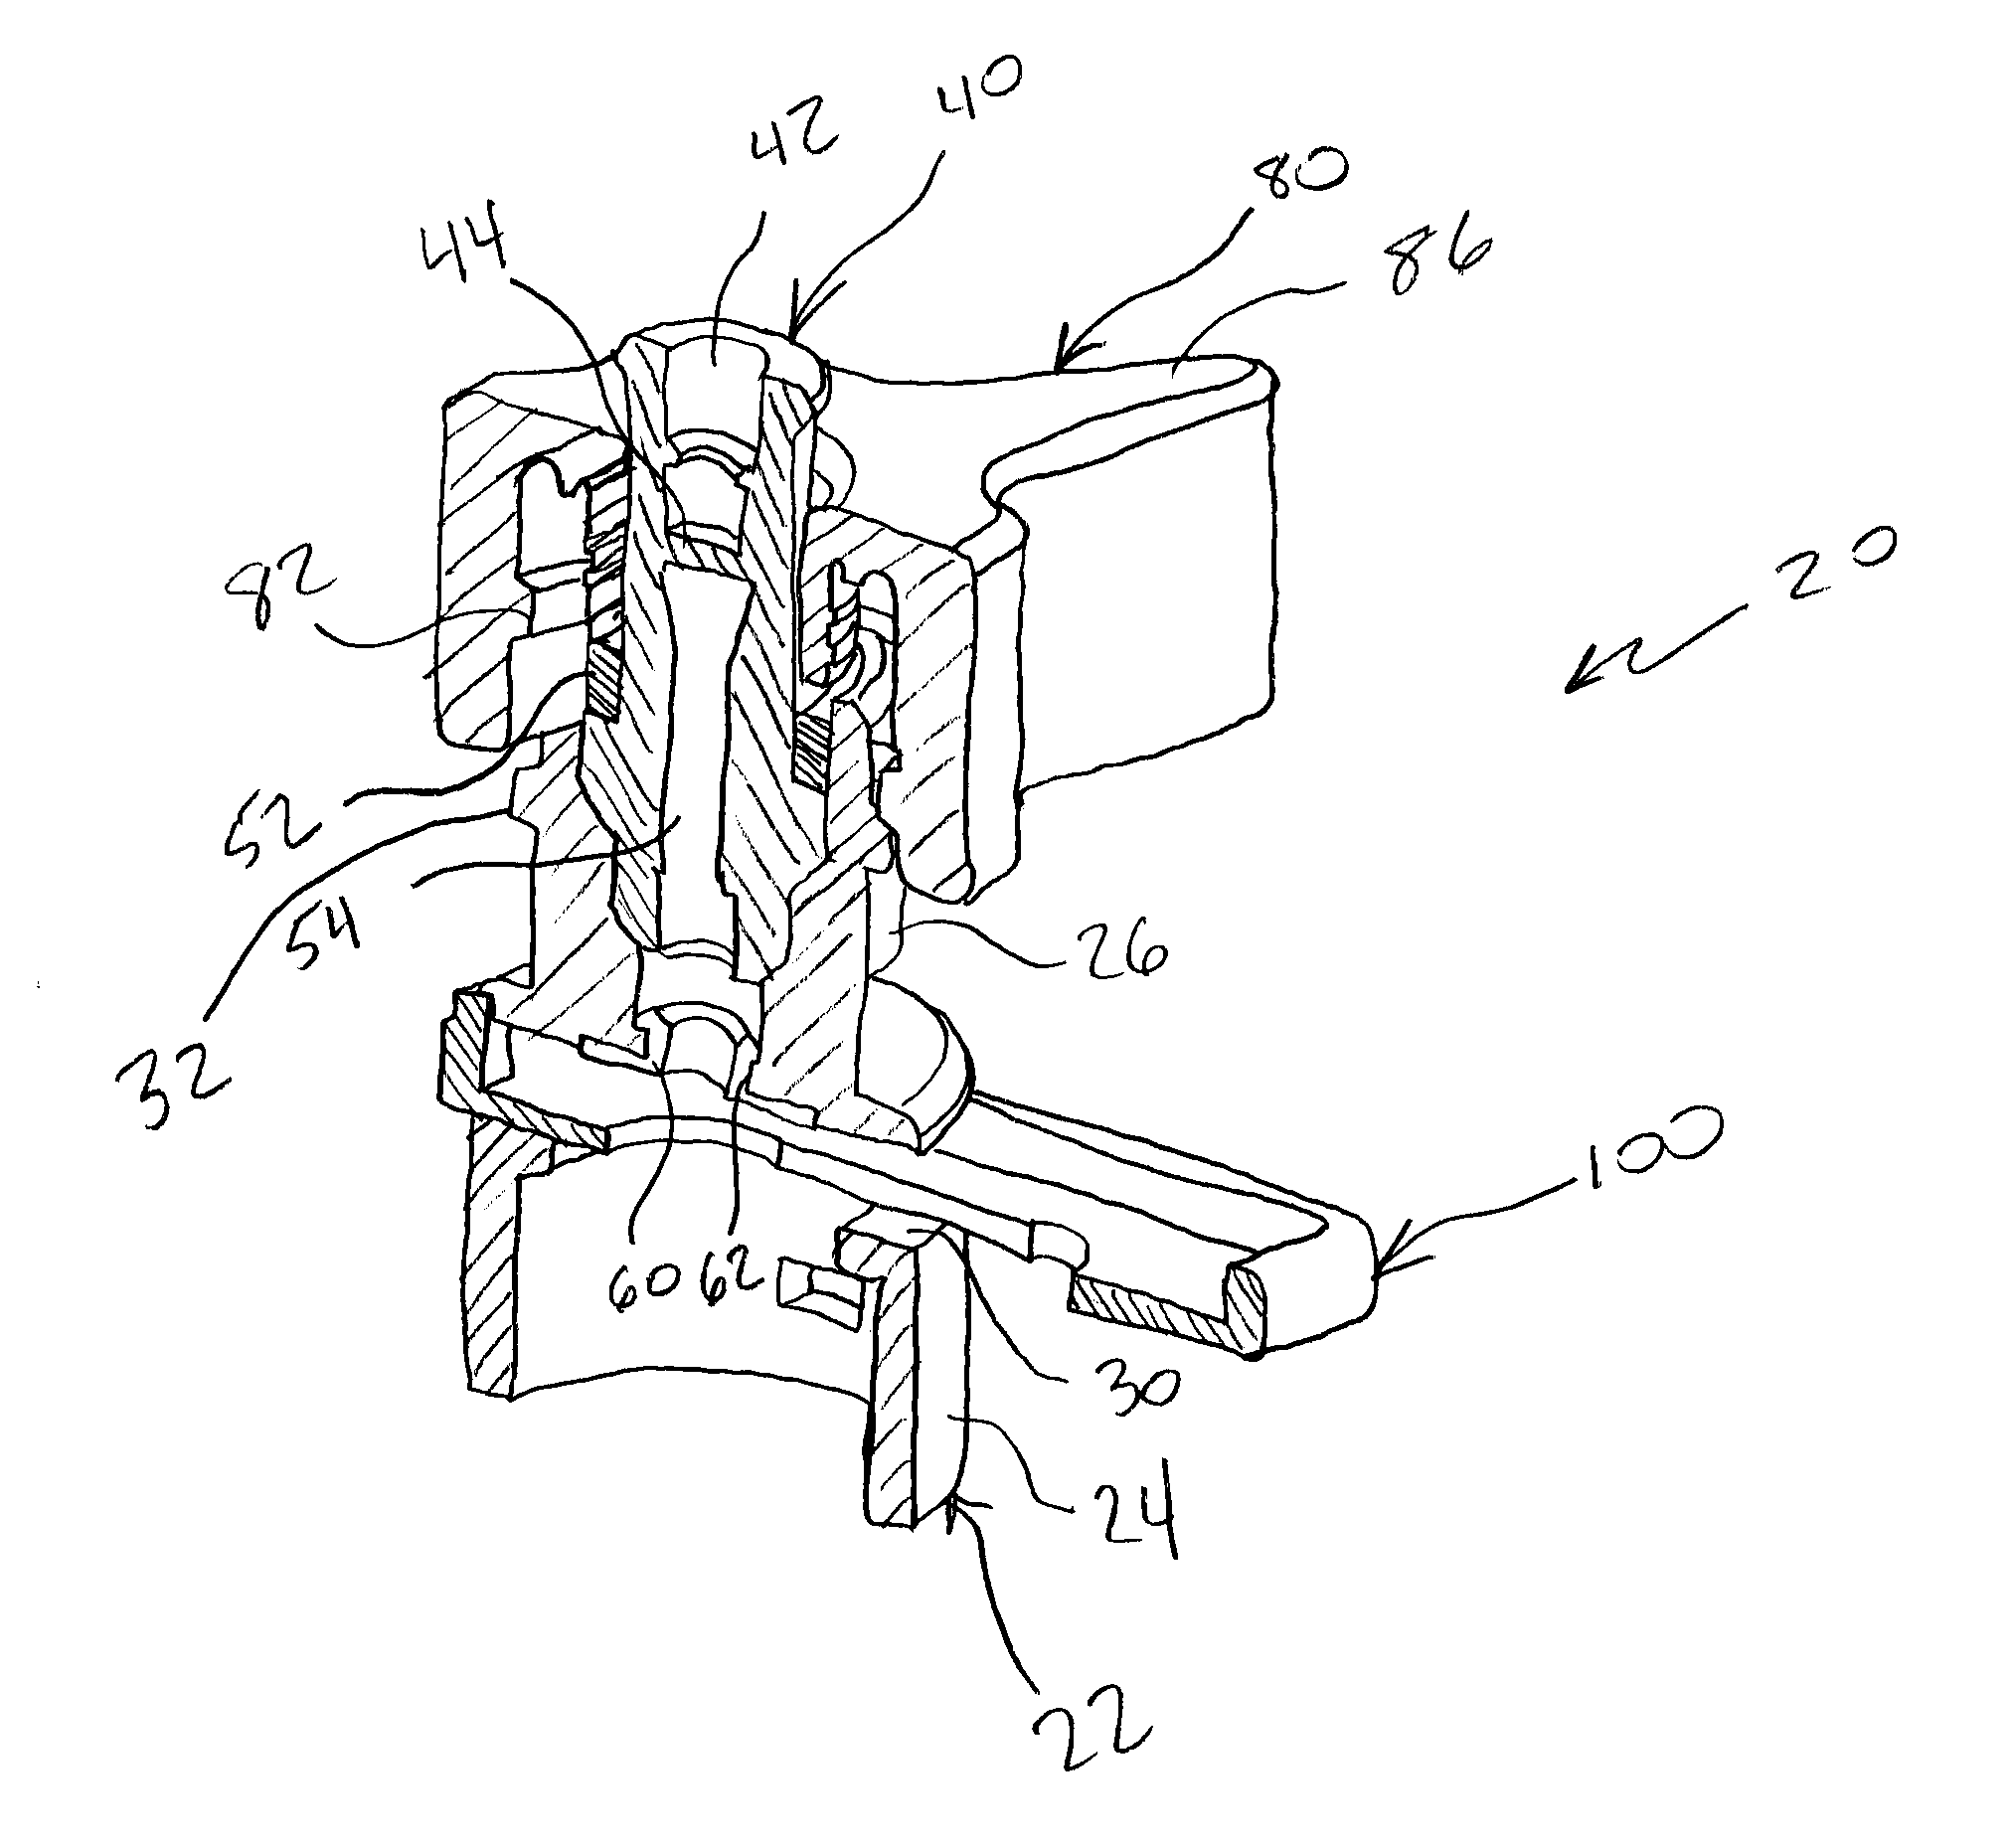 Bronchoscope Adapter and Method